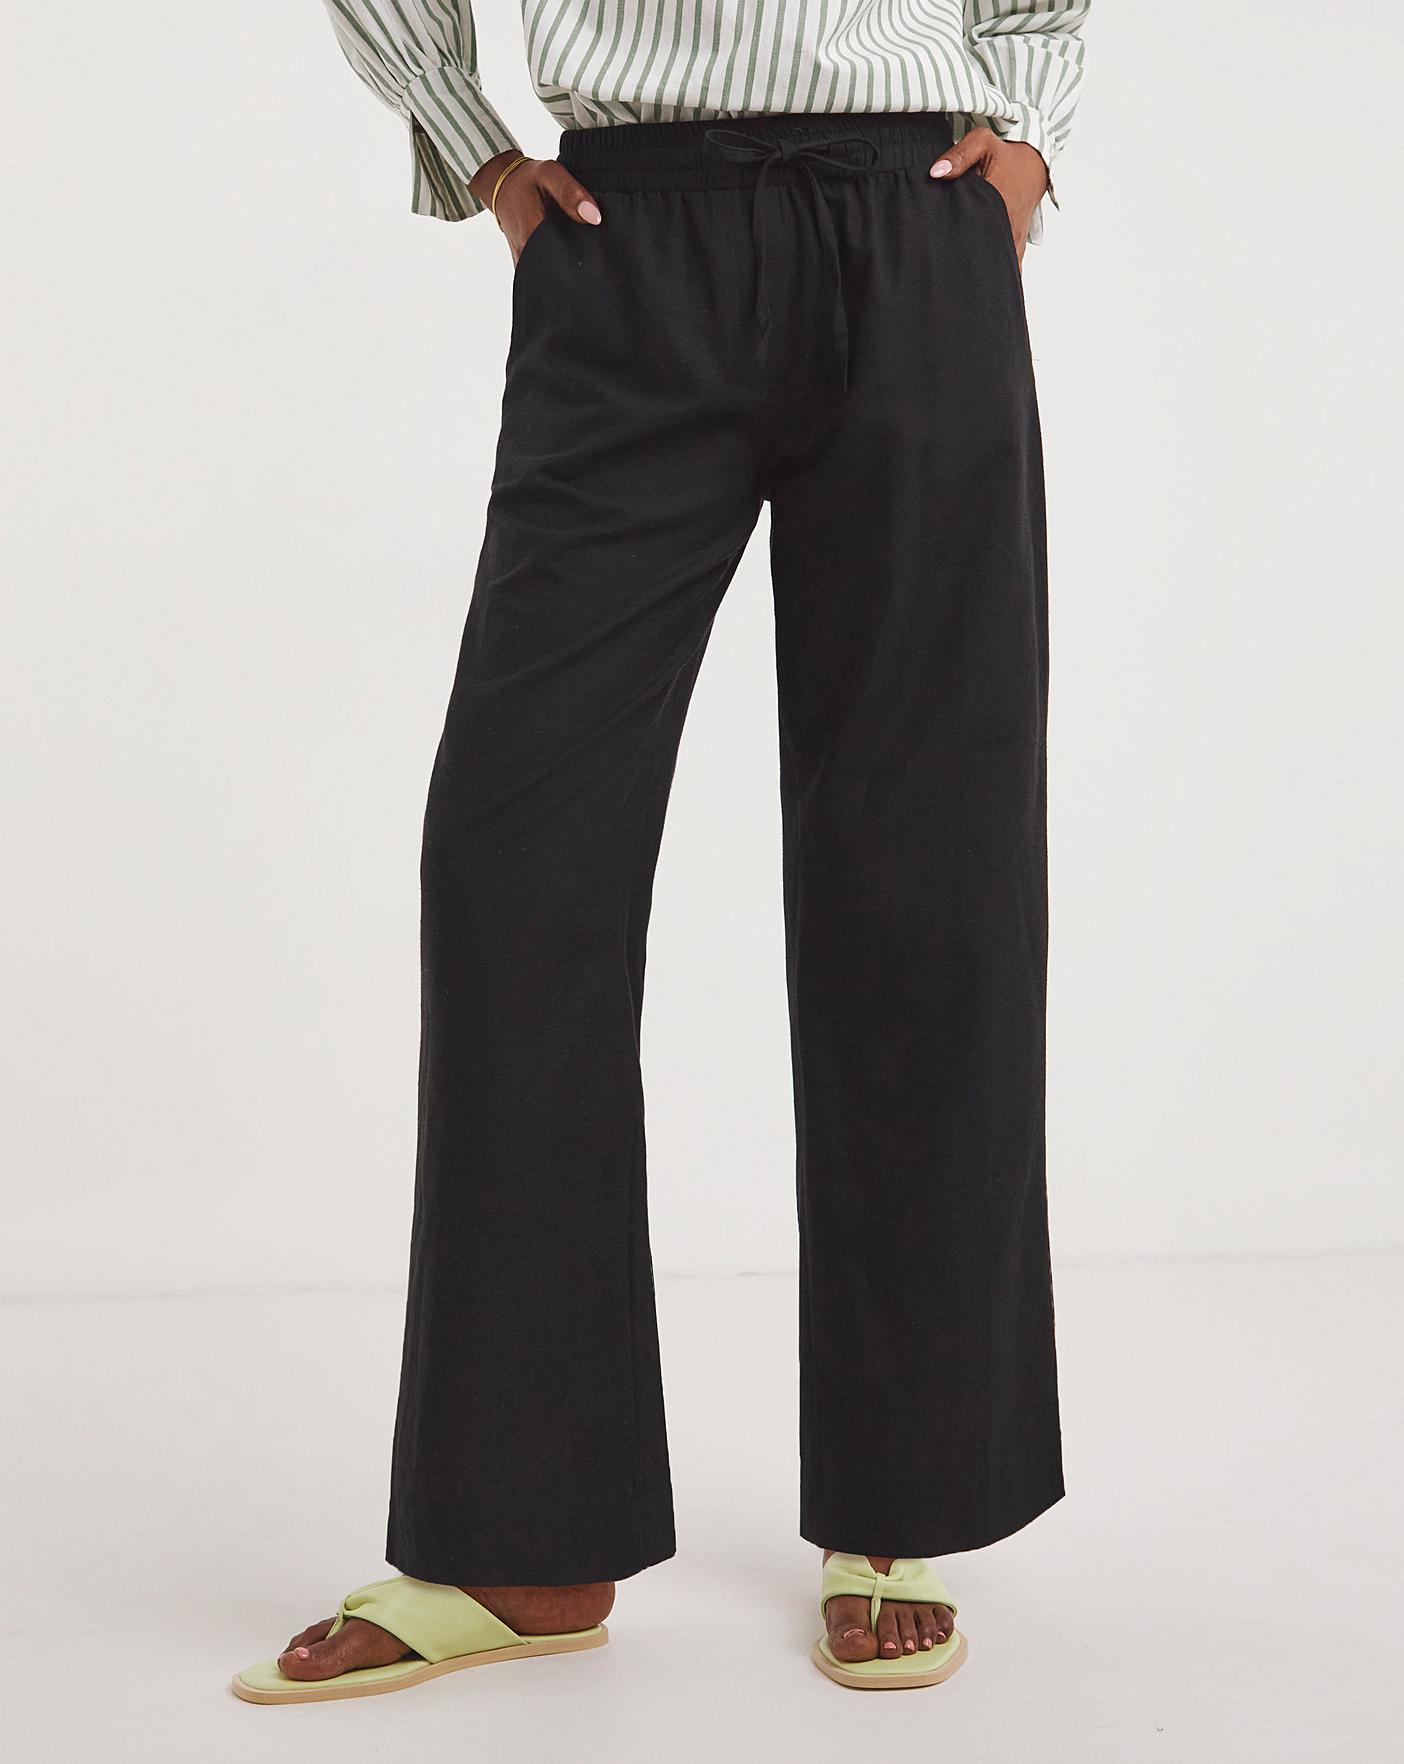 Women Cotton Linen Trousers Ladies Summer Casual Elastic Waist Bottoms  Pants UK  eBay